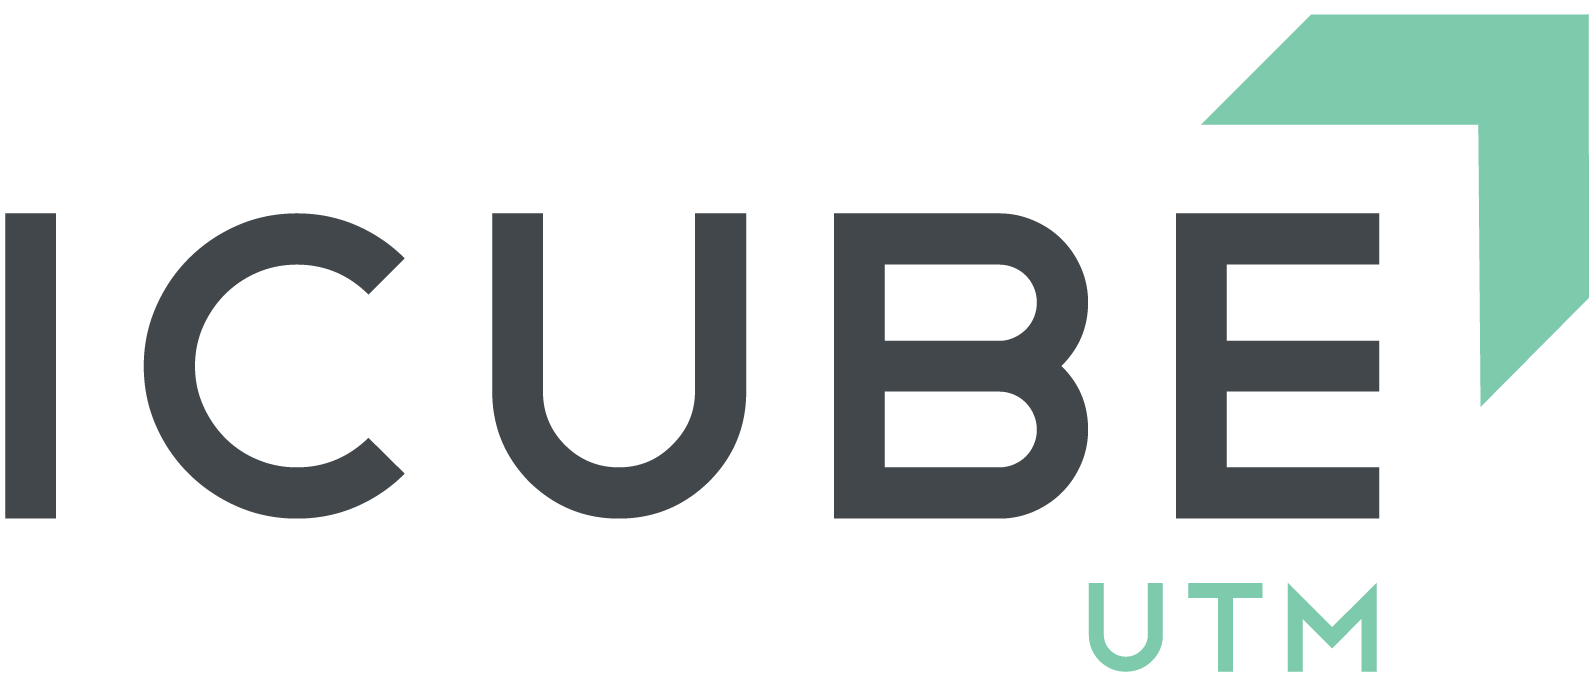 UTM Logo - The ICUBE Brand – ICUBE UTM – Entrepreneurship at UofTMississauga